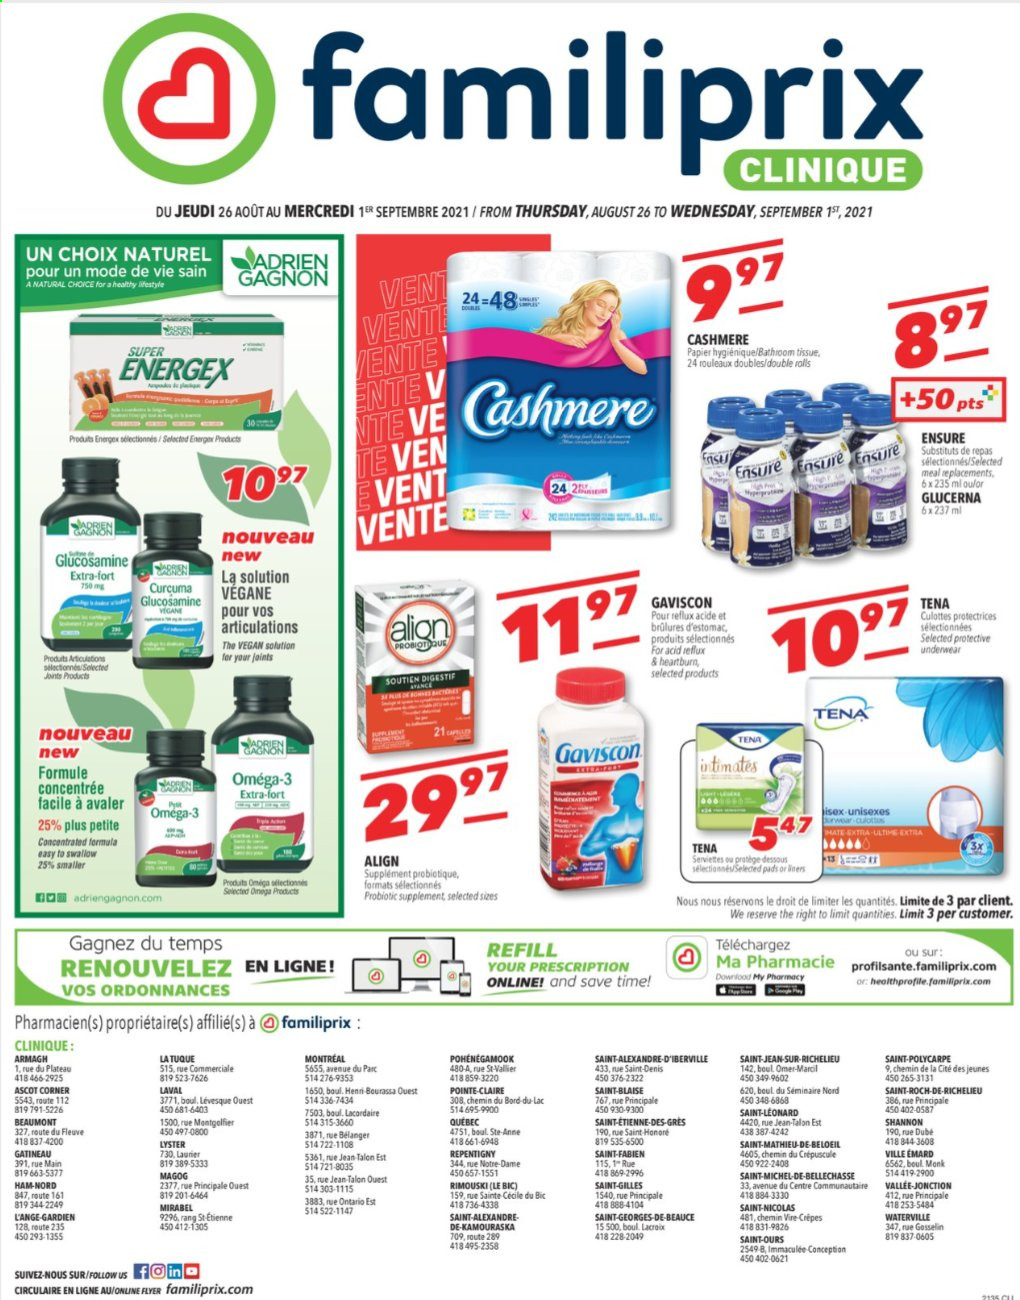 thumbnail - Familiprix Clinique Flyer - August 26, 2021 - September 01, 2021 - Sales products - bath tissue, Clinique, BIC, glucosamine, Omega-3, Glucerna, Gaviscon. Page 1.